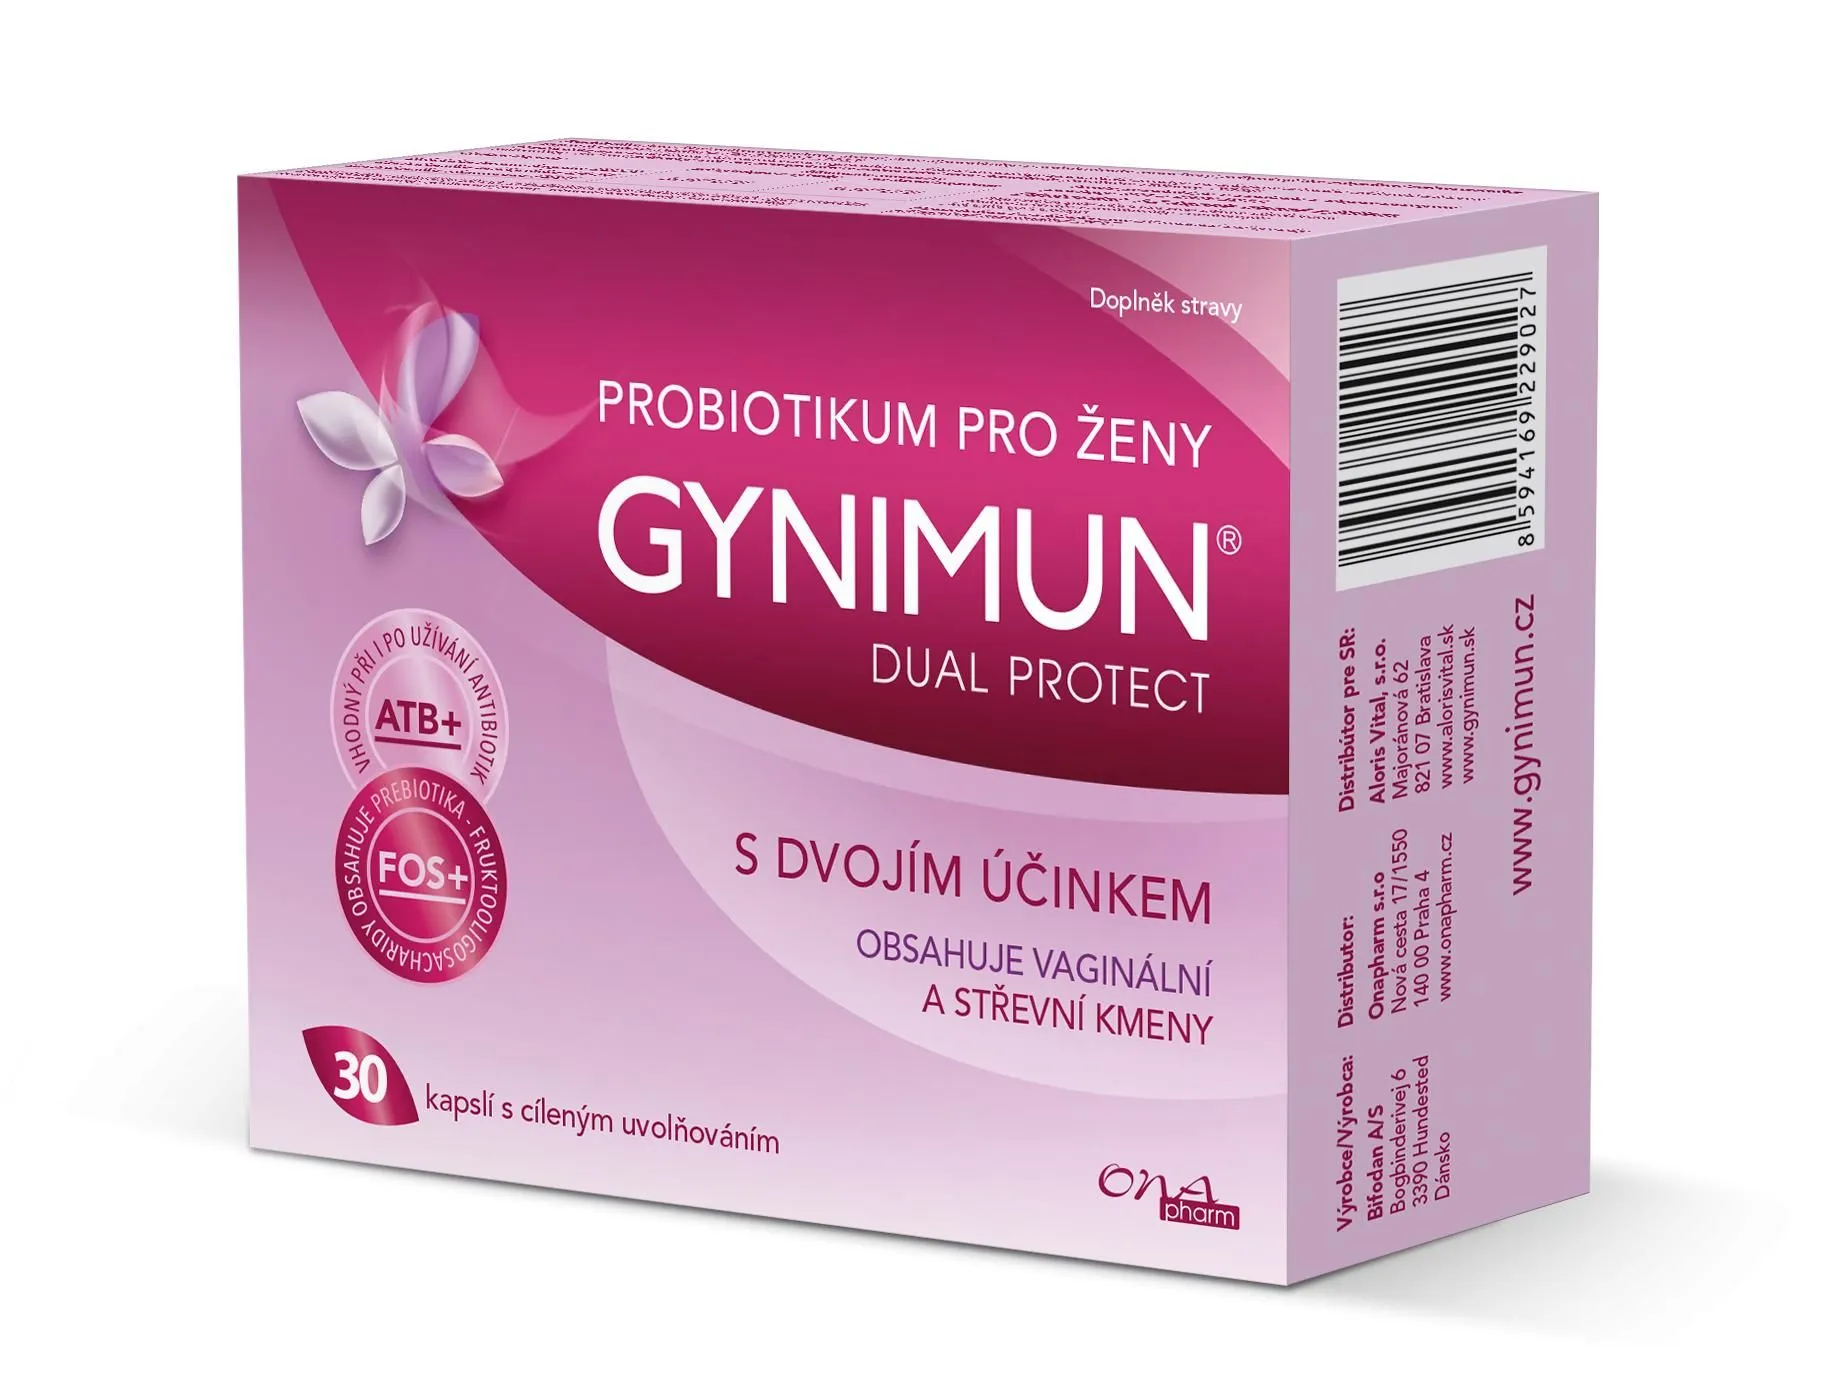 GYNIMUN dual protect